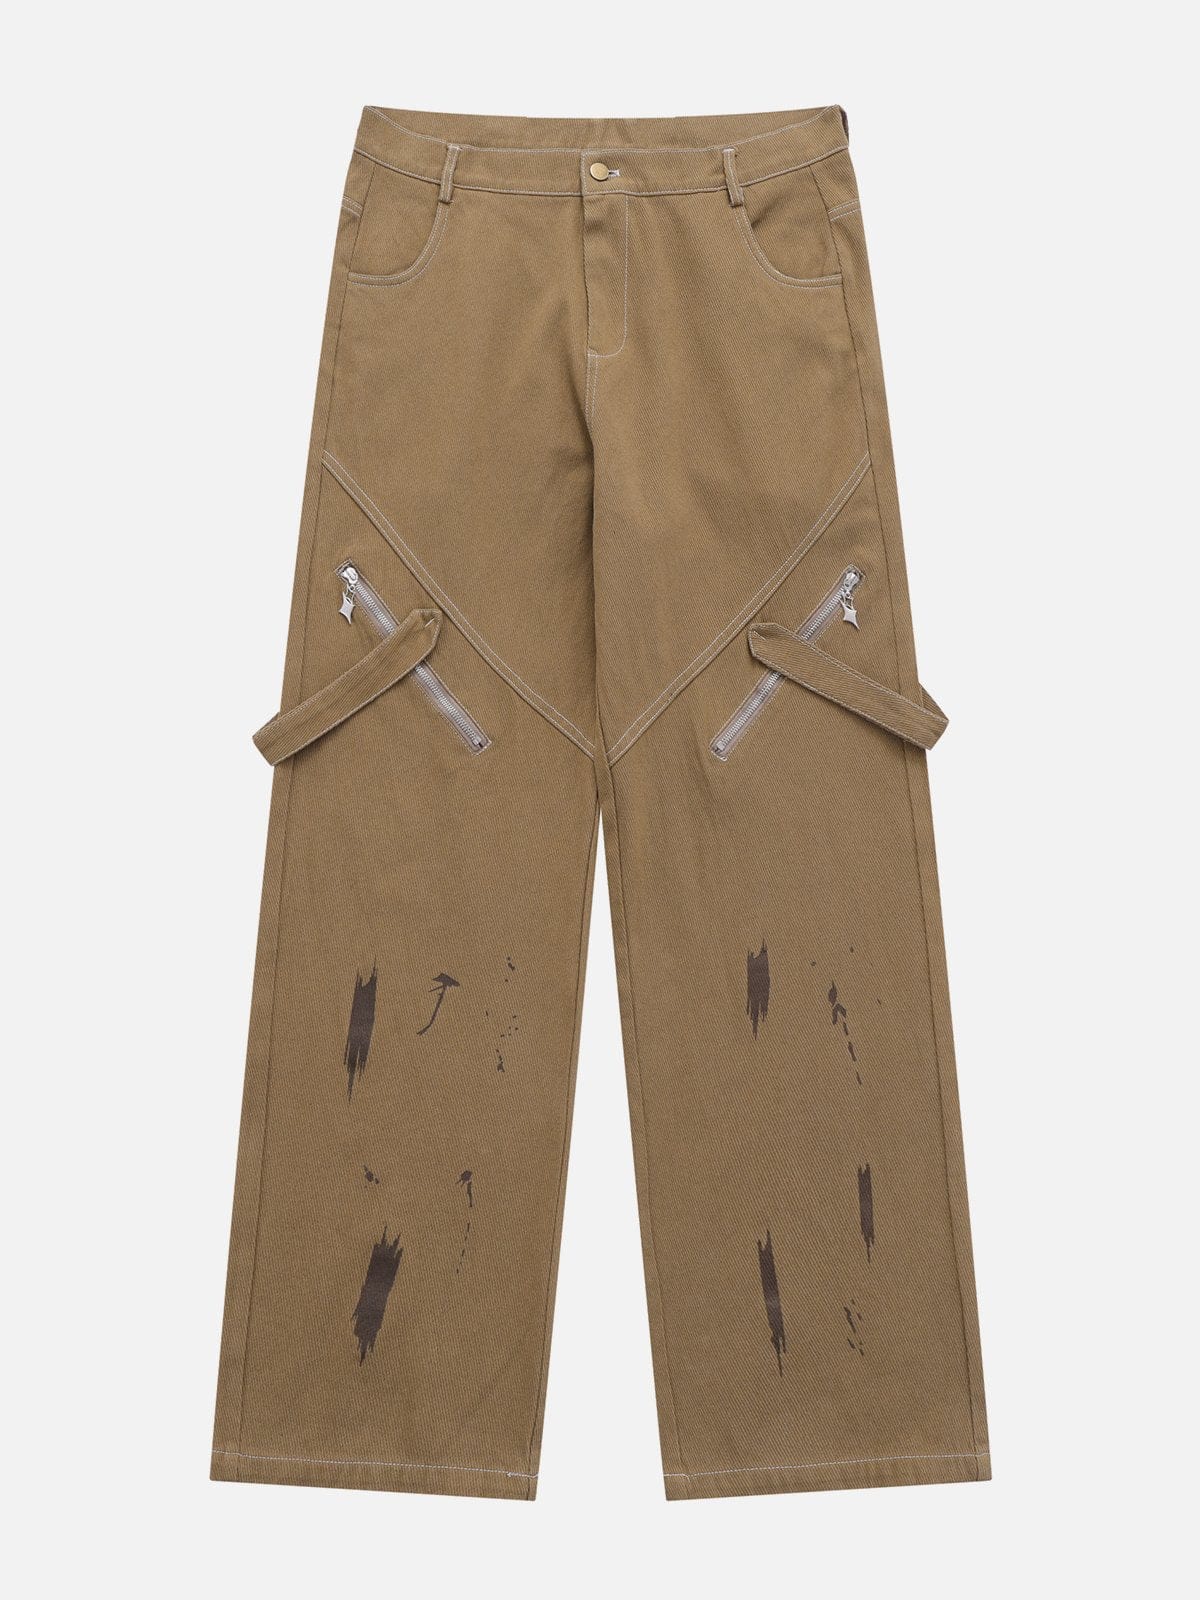 NEV Graffiti Zipper Pants